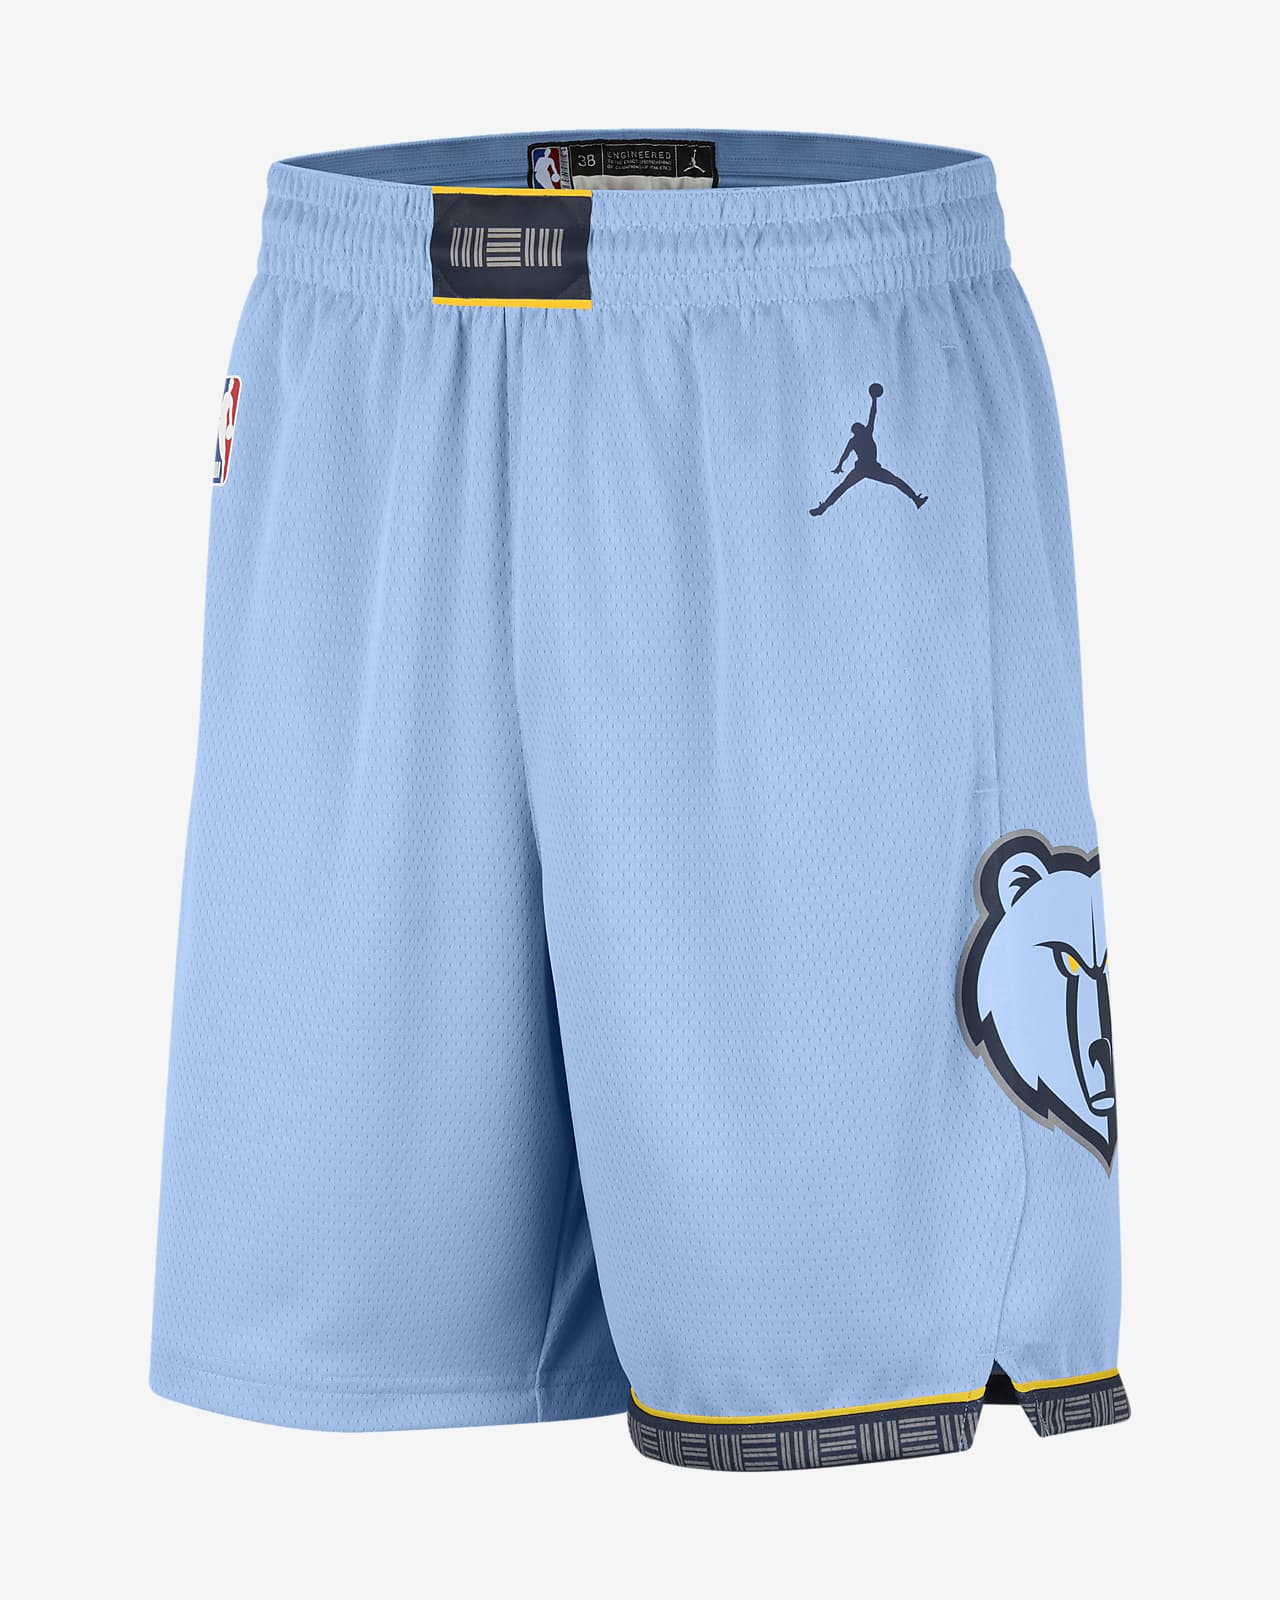 Memphis Grizzlies Nike City Edition Swingman Performance Shorts